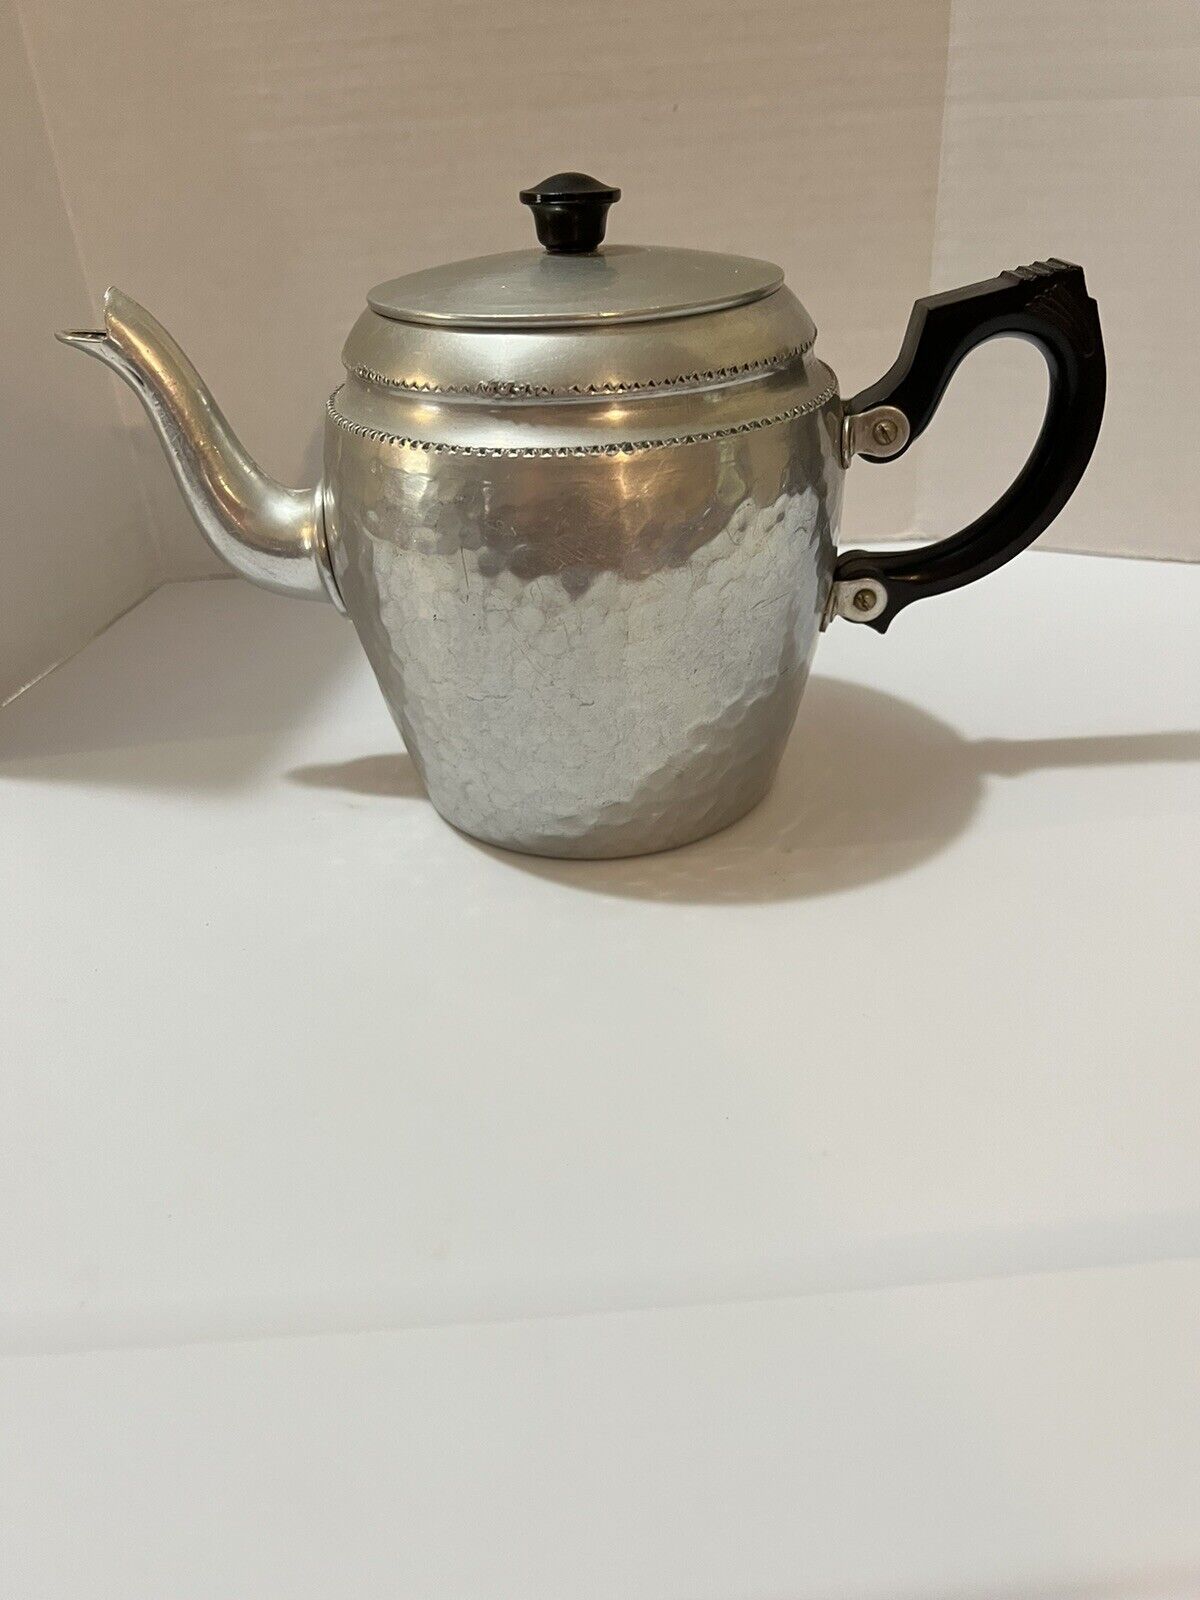 Vintage Sona Ware England Aluminum Teapot 6548 with tea strainer